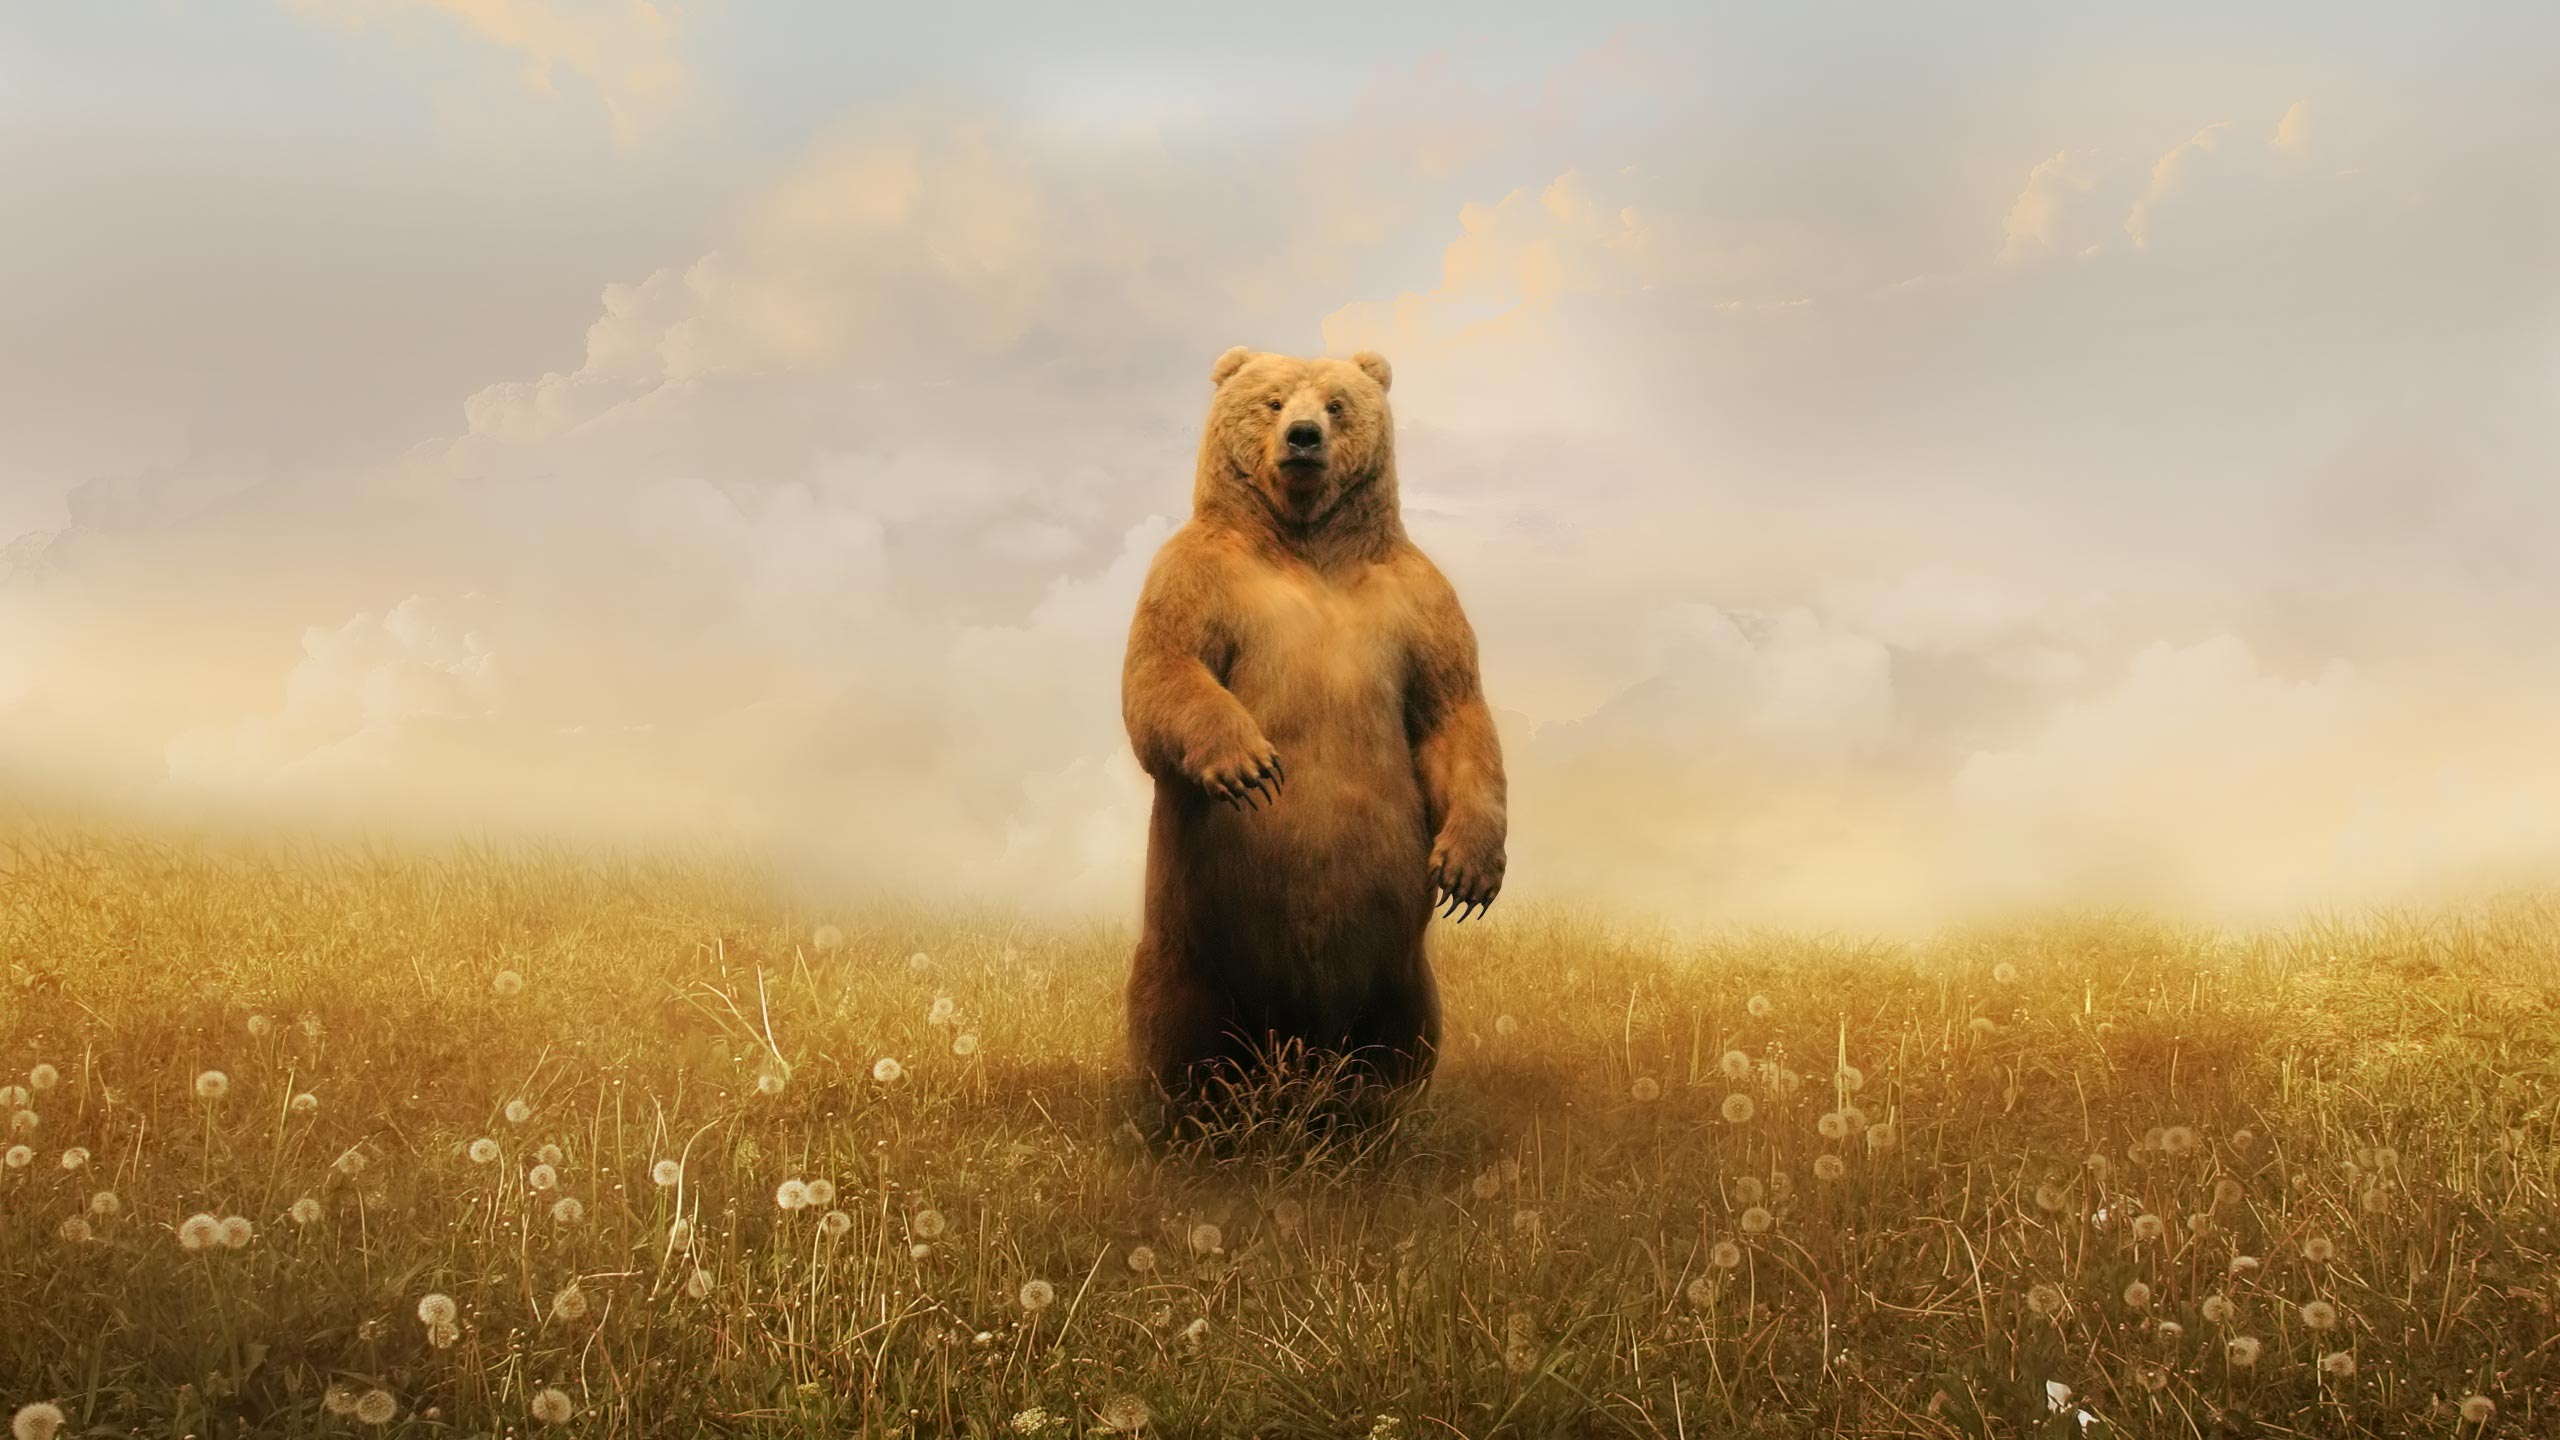 Desktop Wallpaper · Gallery · Windows 7 · Spring bear pc ...